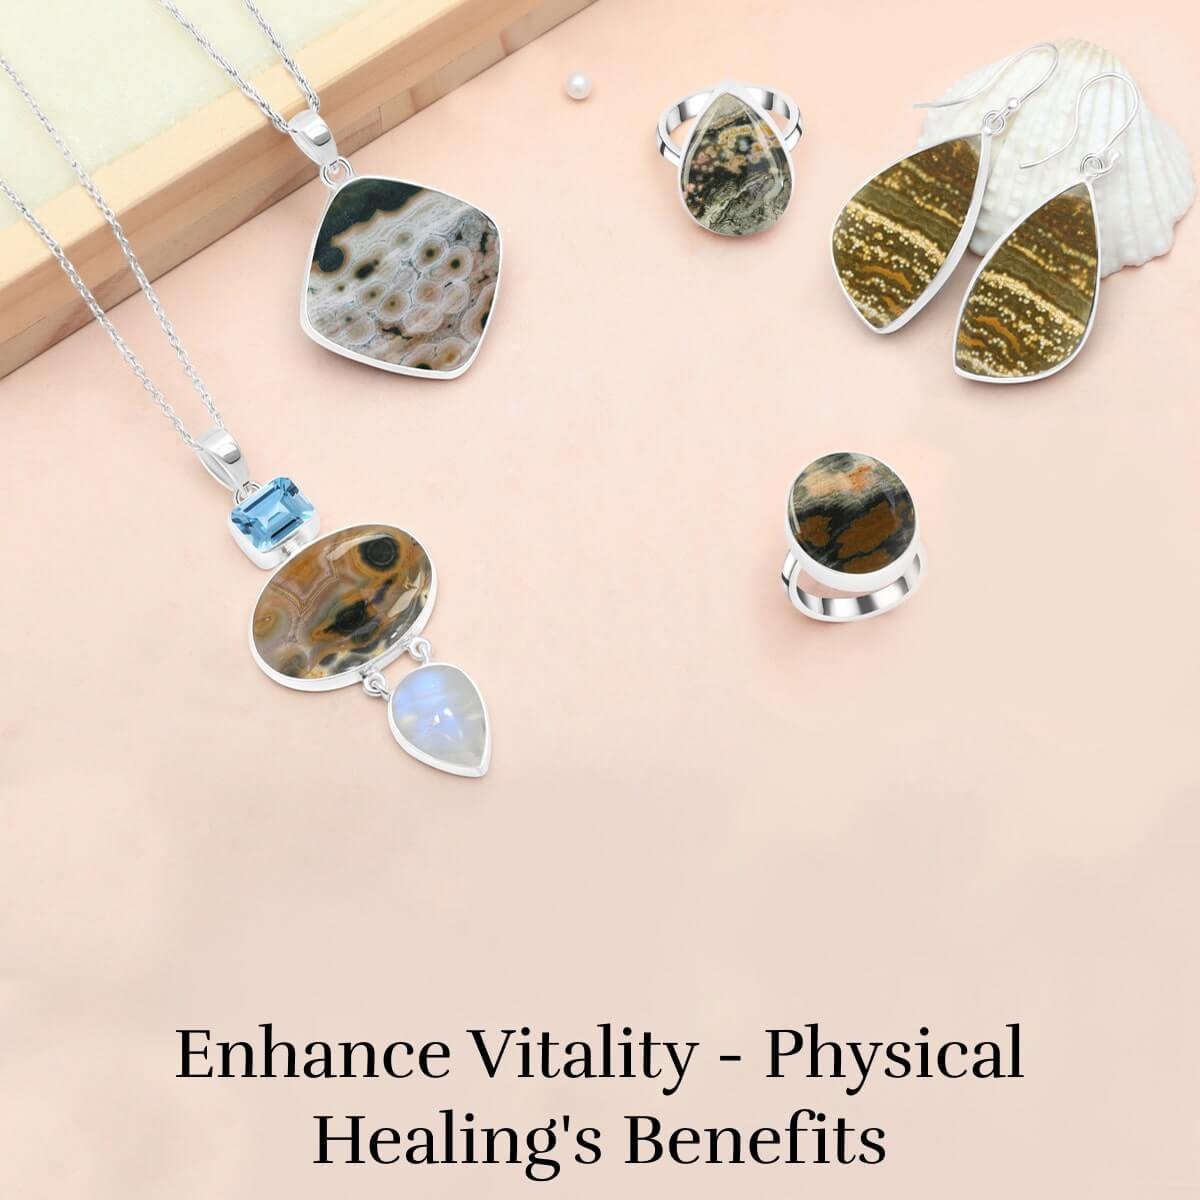 Physical Healing Properties